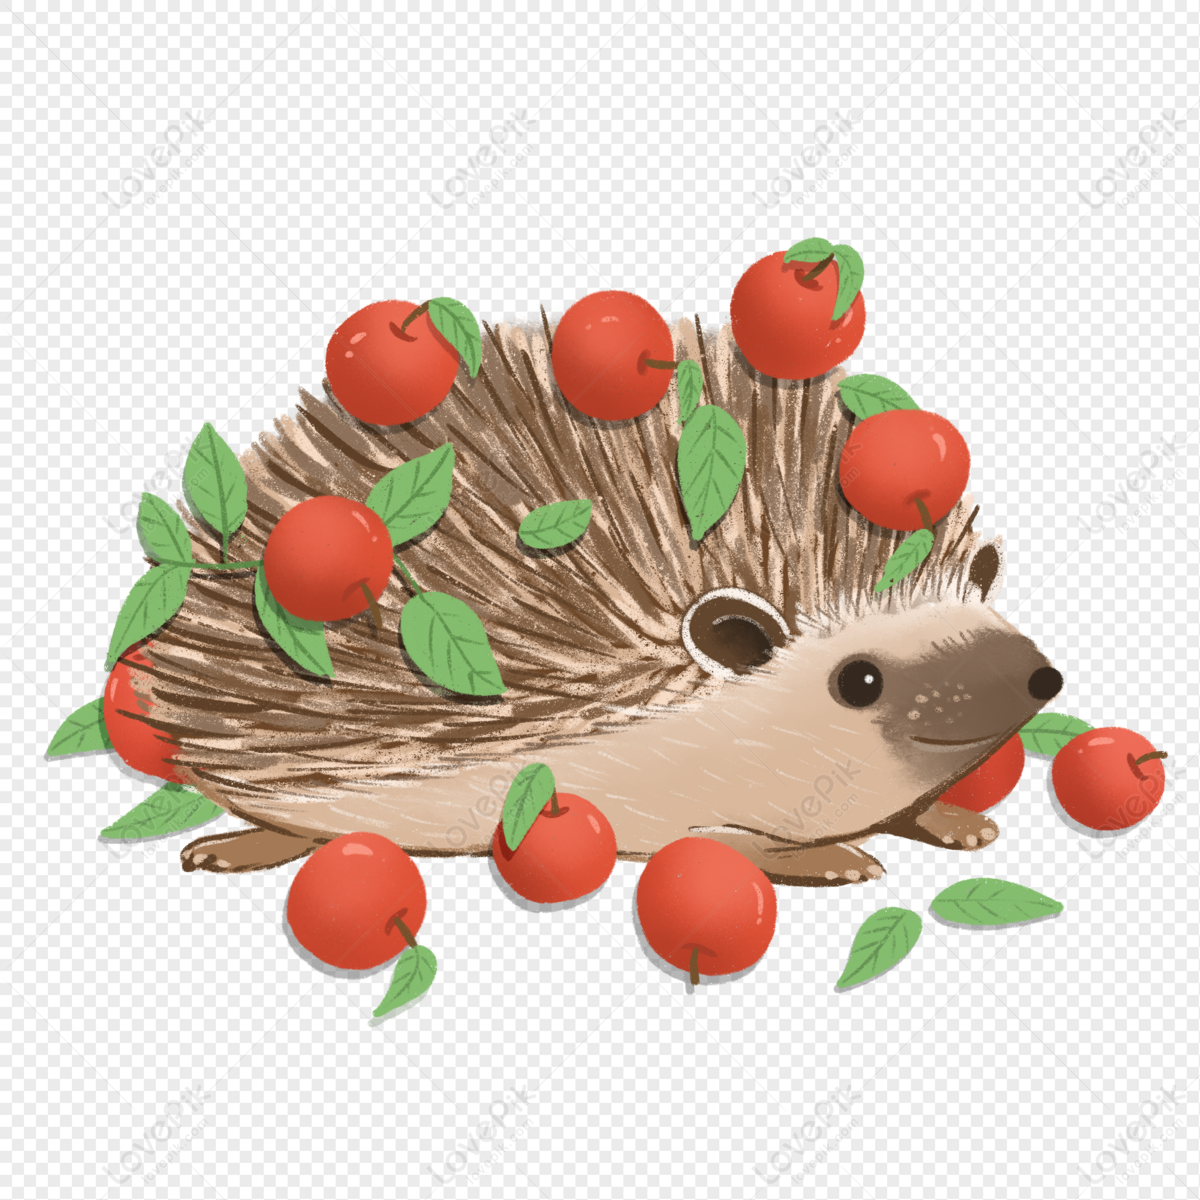 Cute Hedgehog Mascot Character Logo Cartoon Icon Illustration Stock  Illustration - Download Image Now - iStock